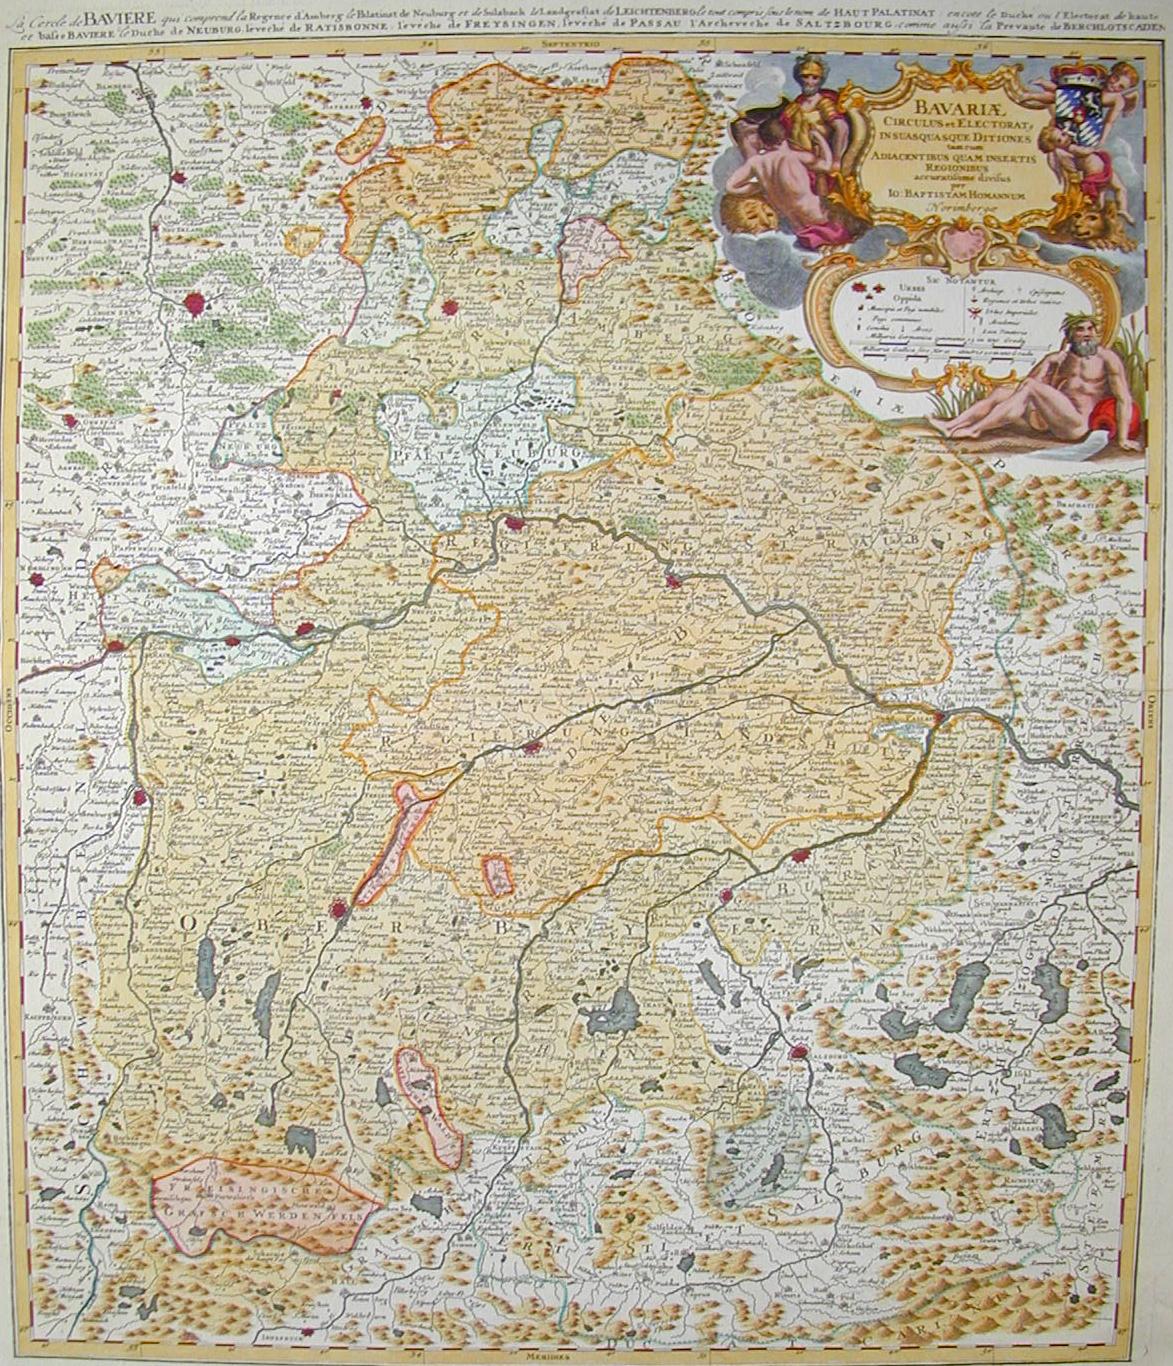 La Baviera (Germania) 1750 ca.